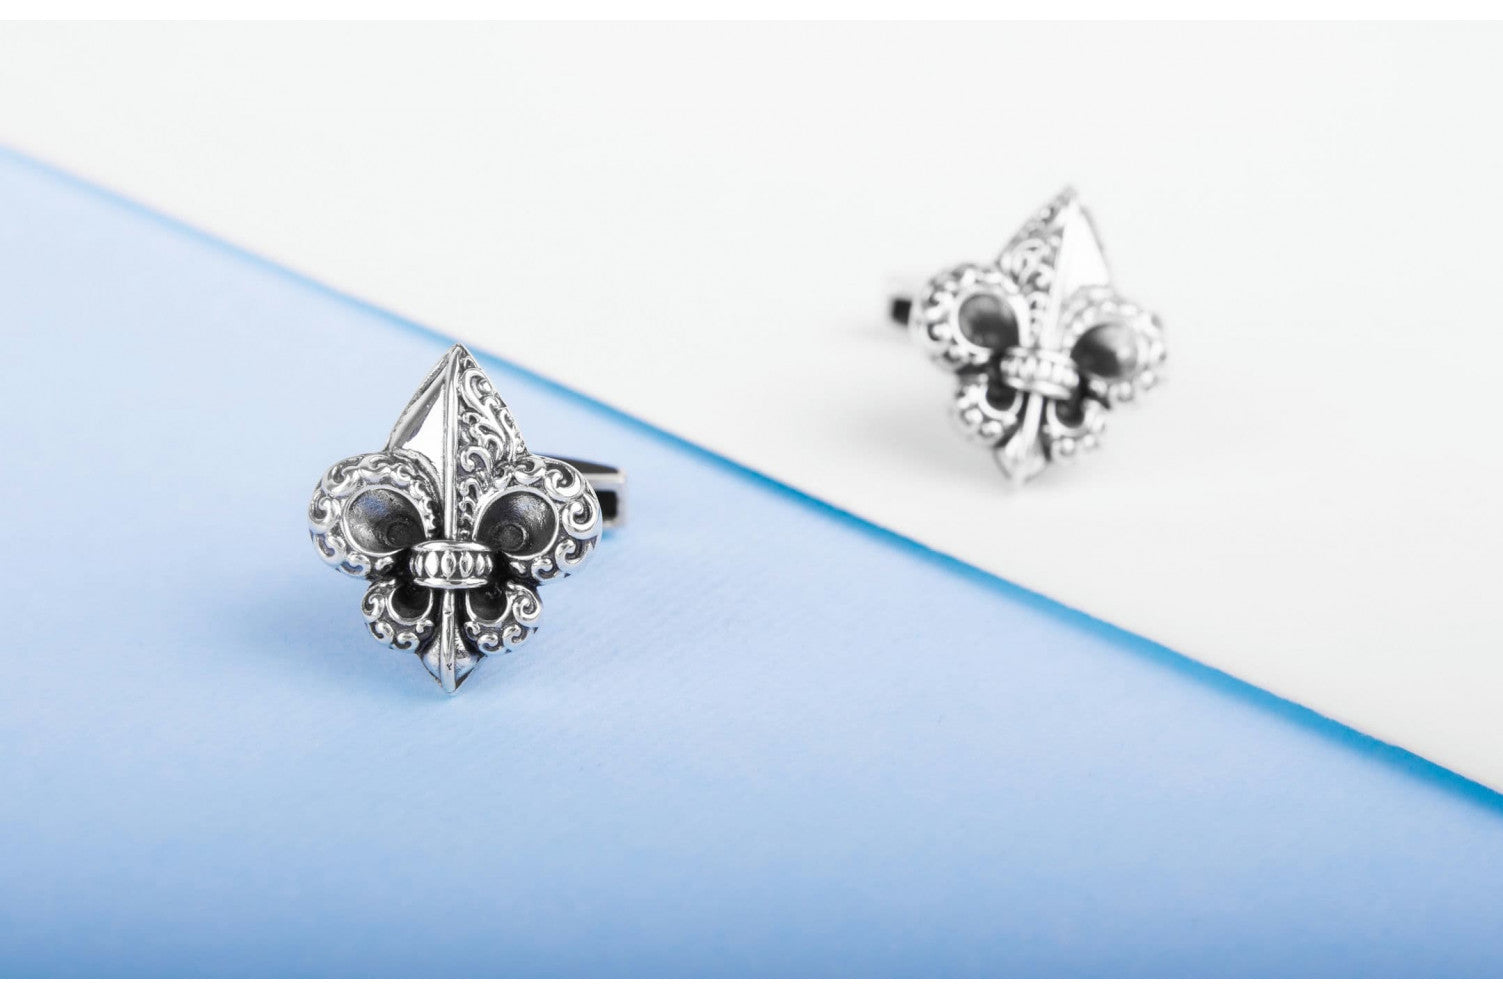 925 Silver Fashion Cufflinks with Fleur-de-lis Heraldic lily, Unique handmade jewelry